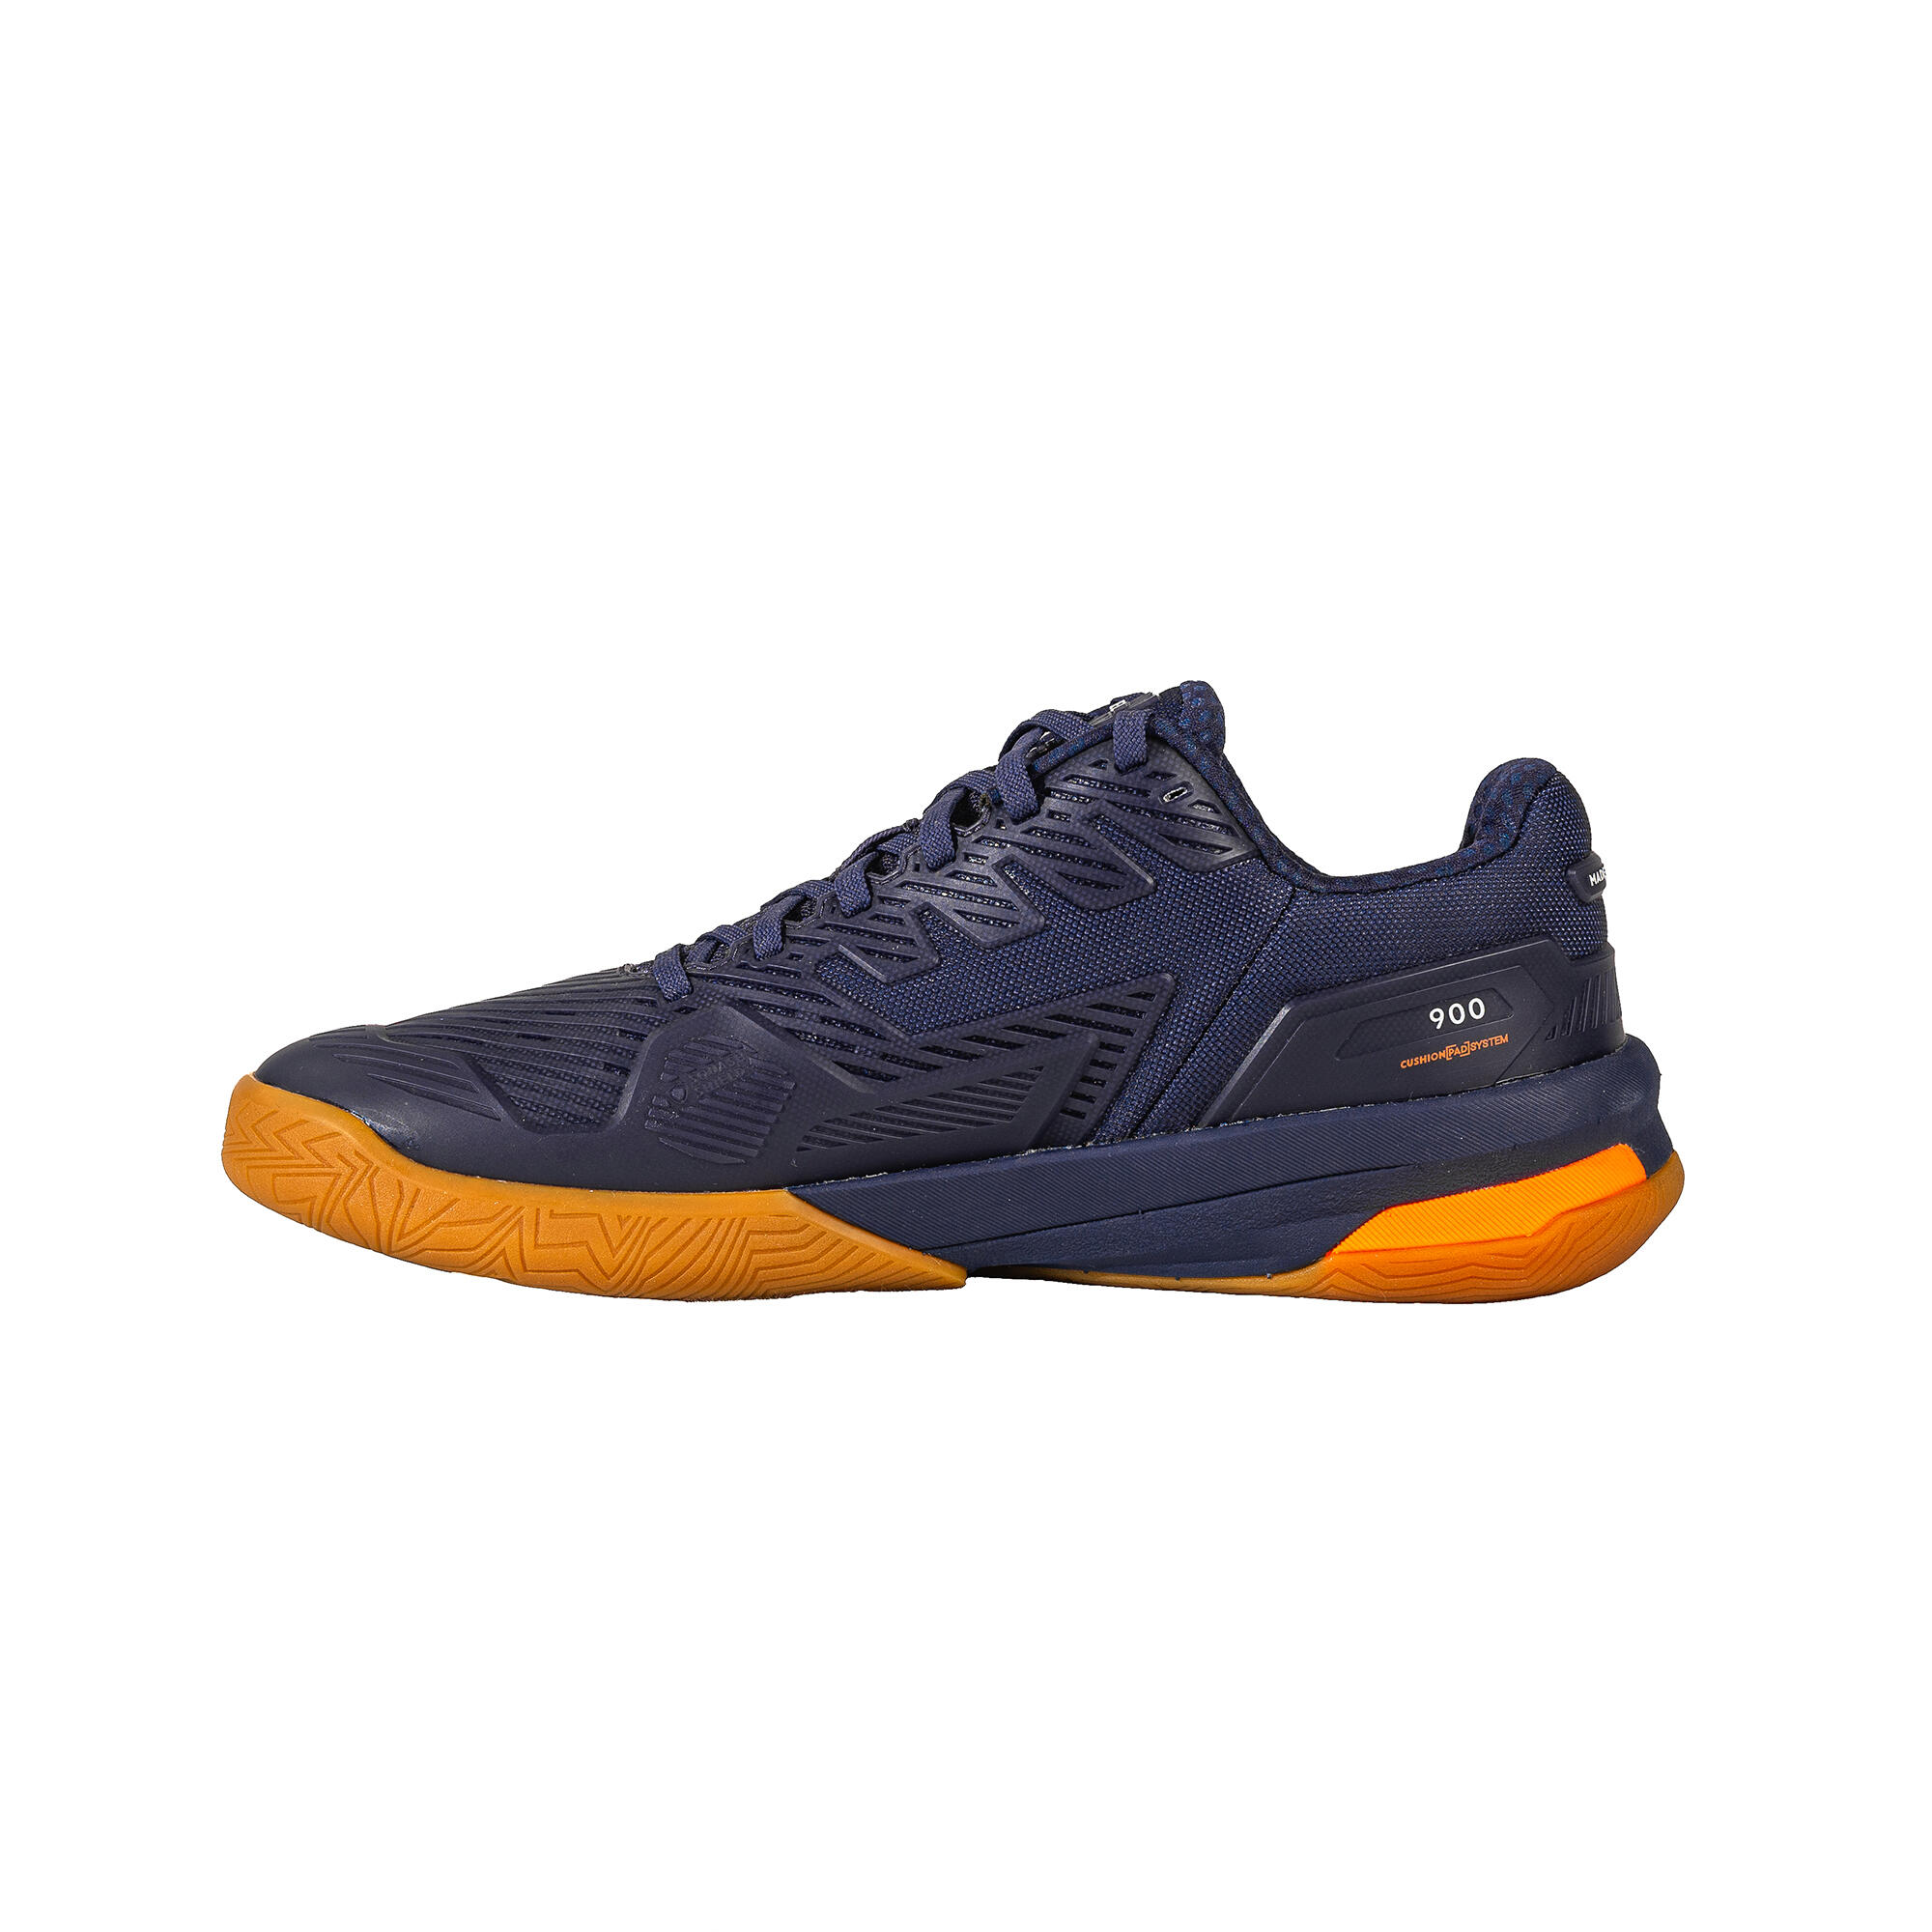 Squash Shoes Speed 900 - Blue 8/10